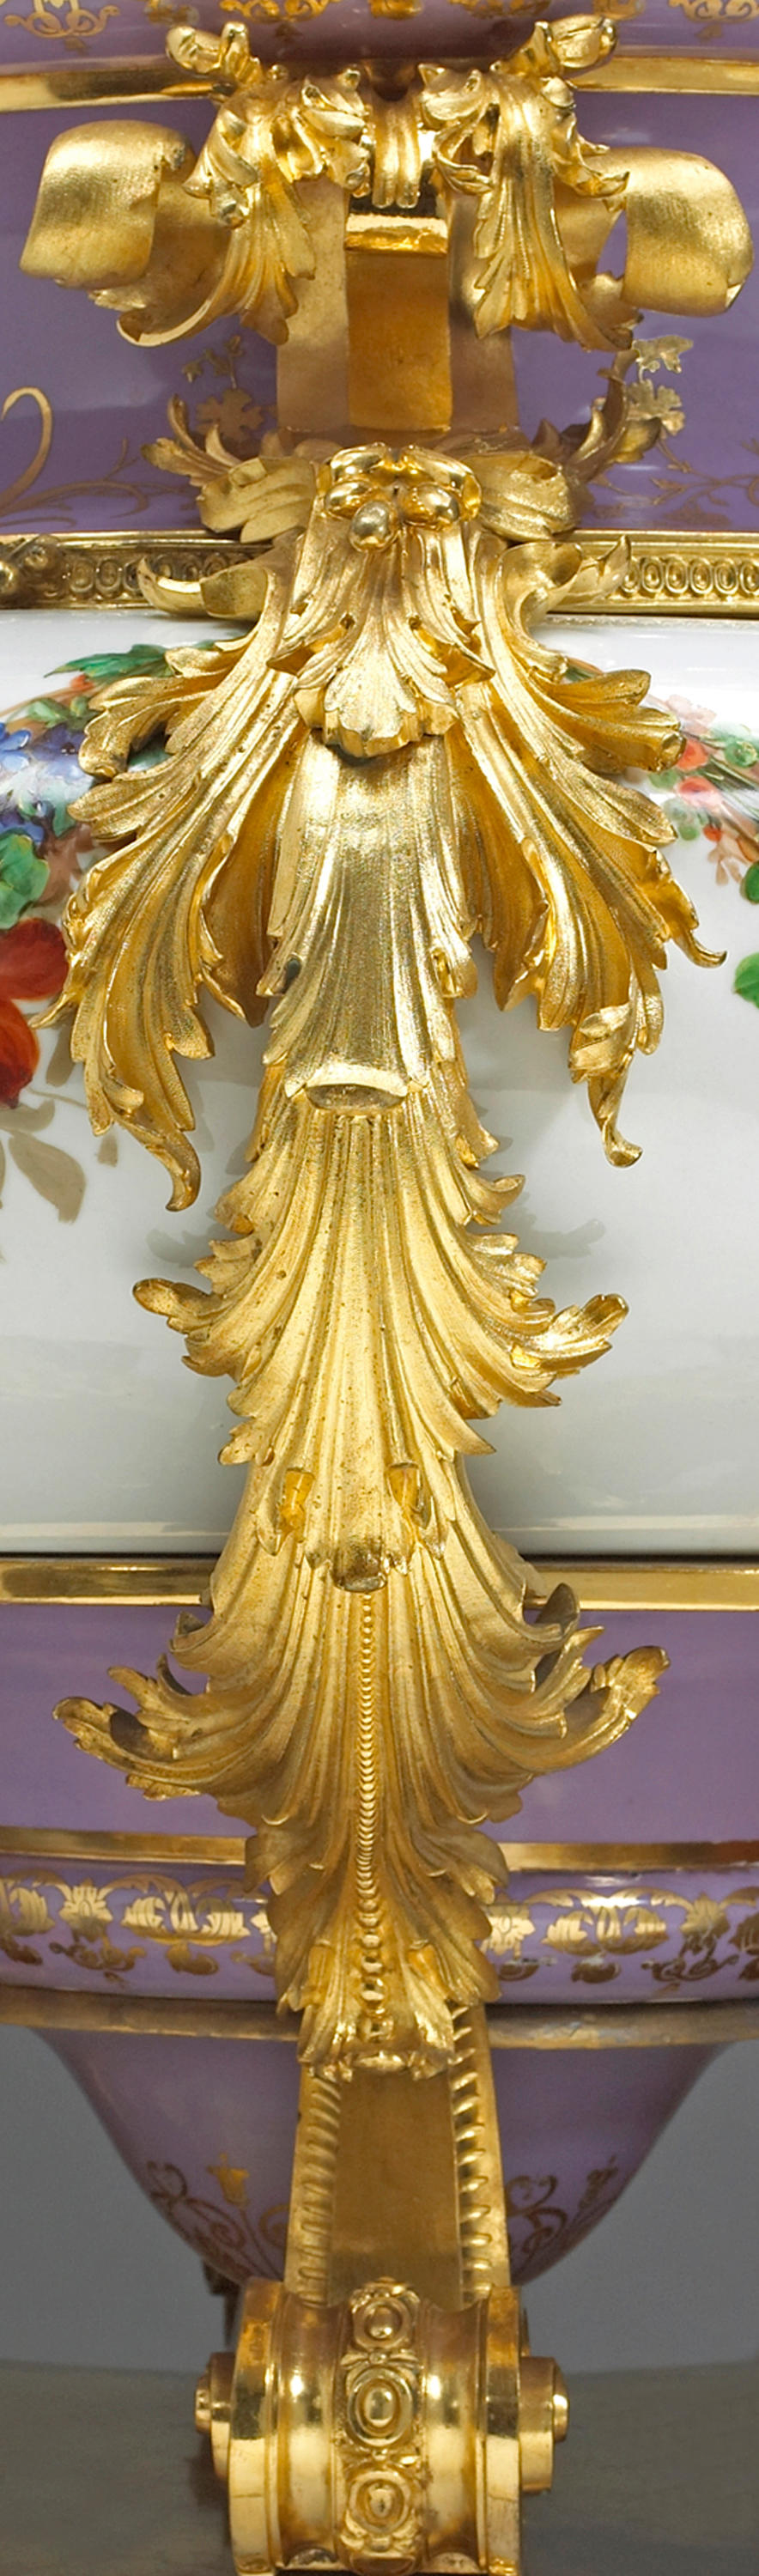 A monumental Russian gilt-bronze-mounted porcelain vase